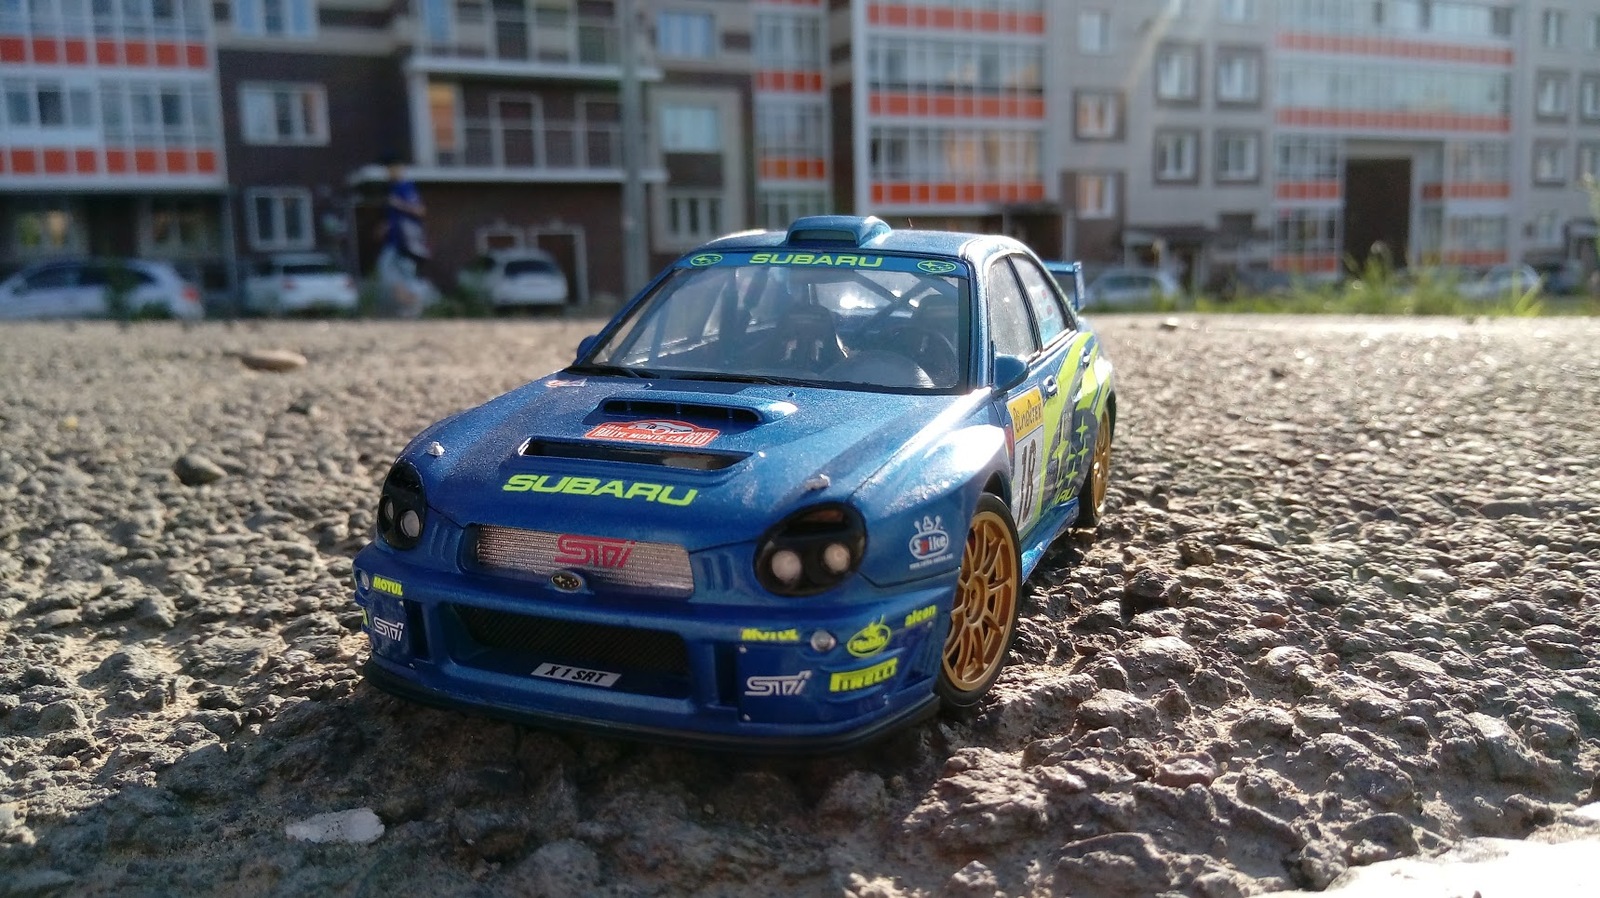 Subaru Impreza WRC 2001 1/24 by Tamiya - Longpost, Subaru impreza, Prefabricated model, Car modeling, Tamiya, My